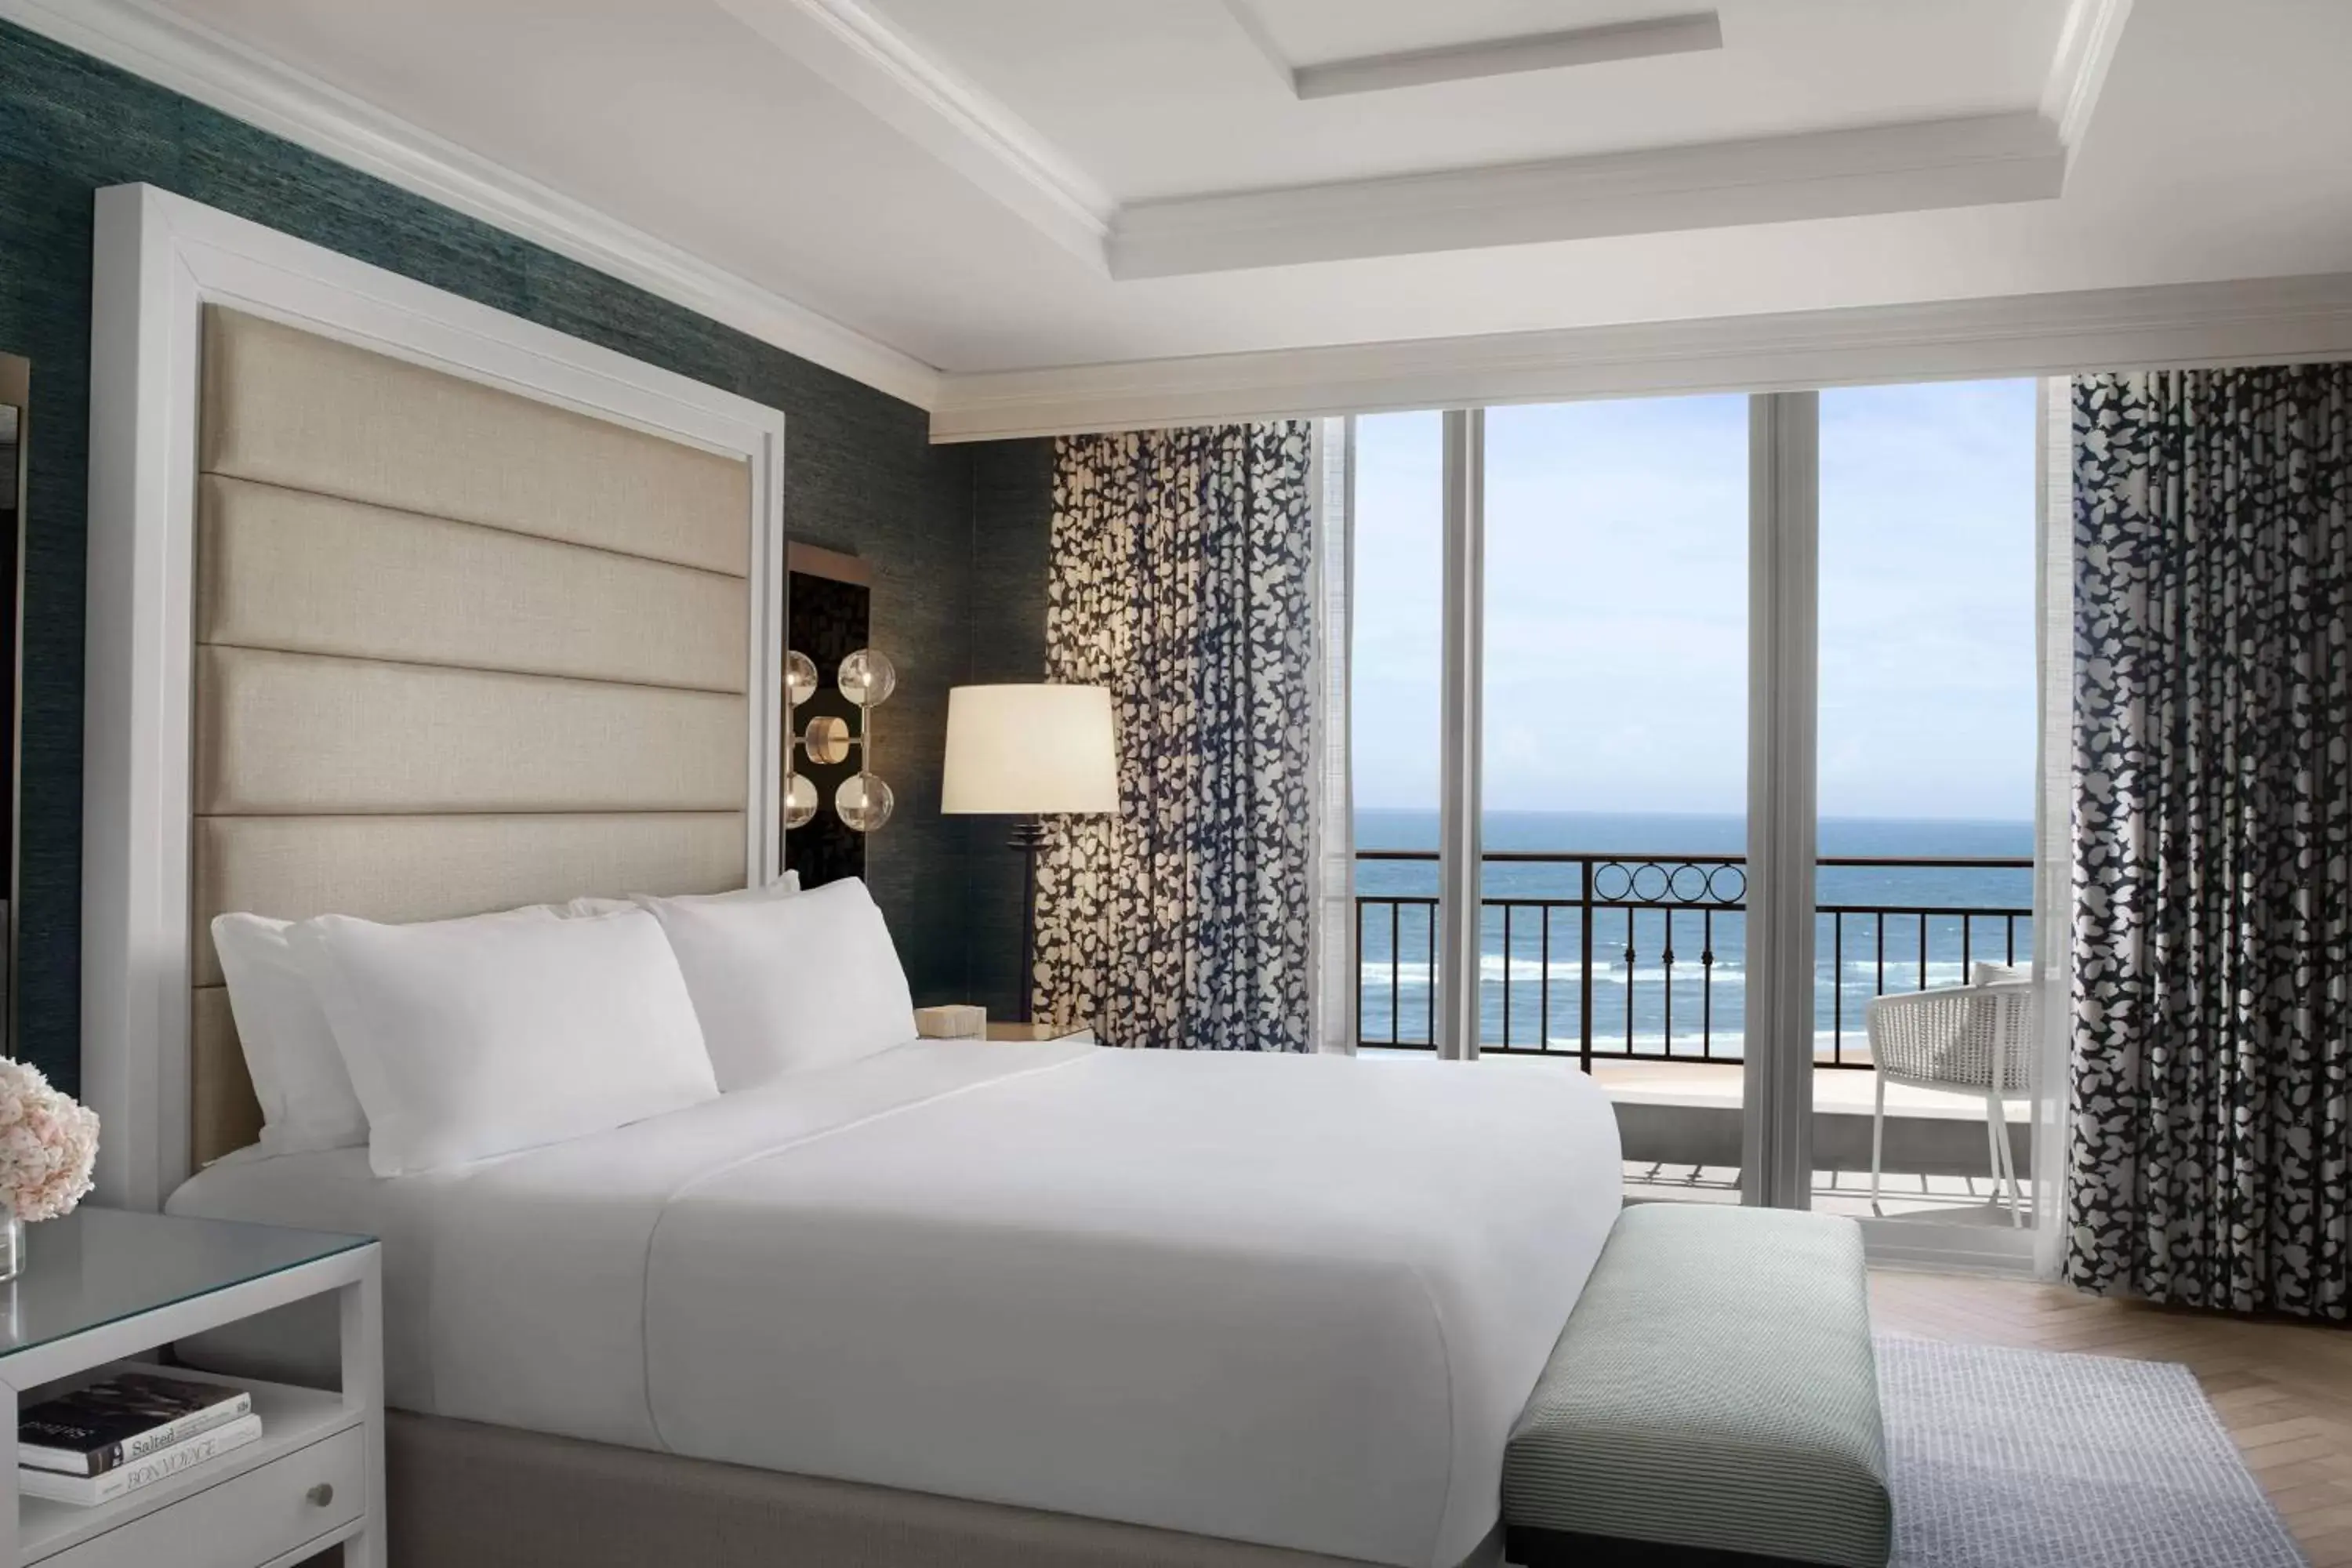 Bedroom in The Ritz-Carlton Amelia Island